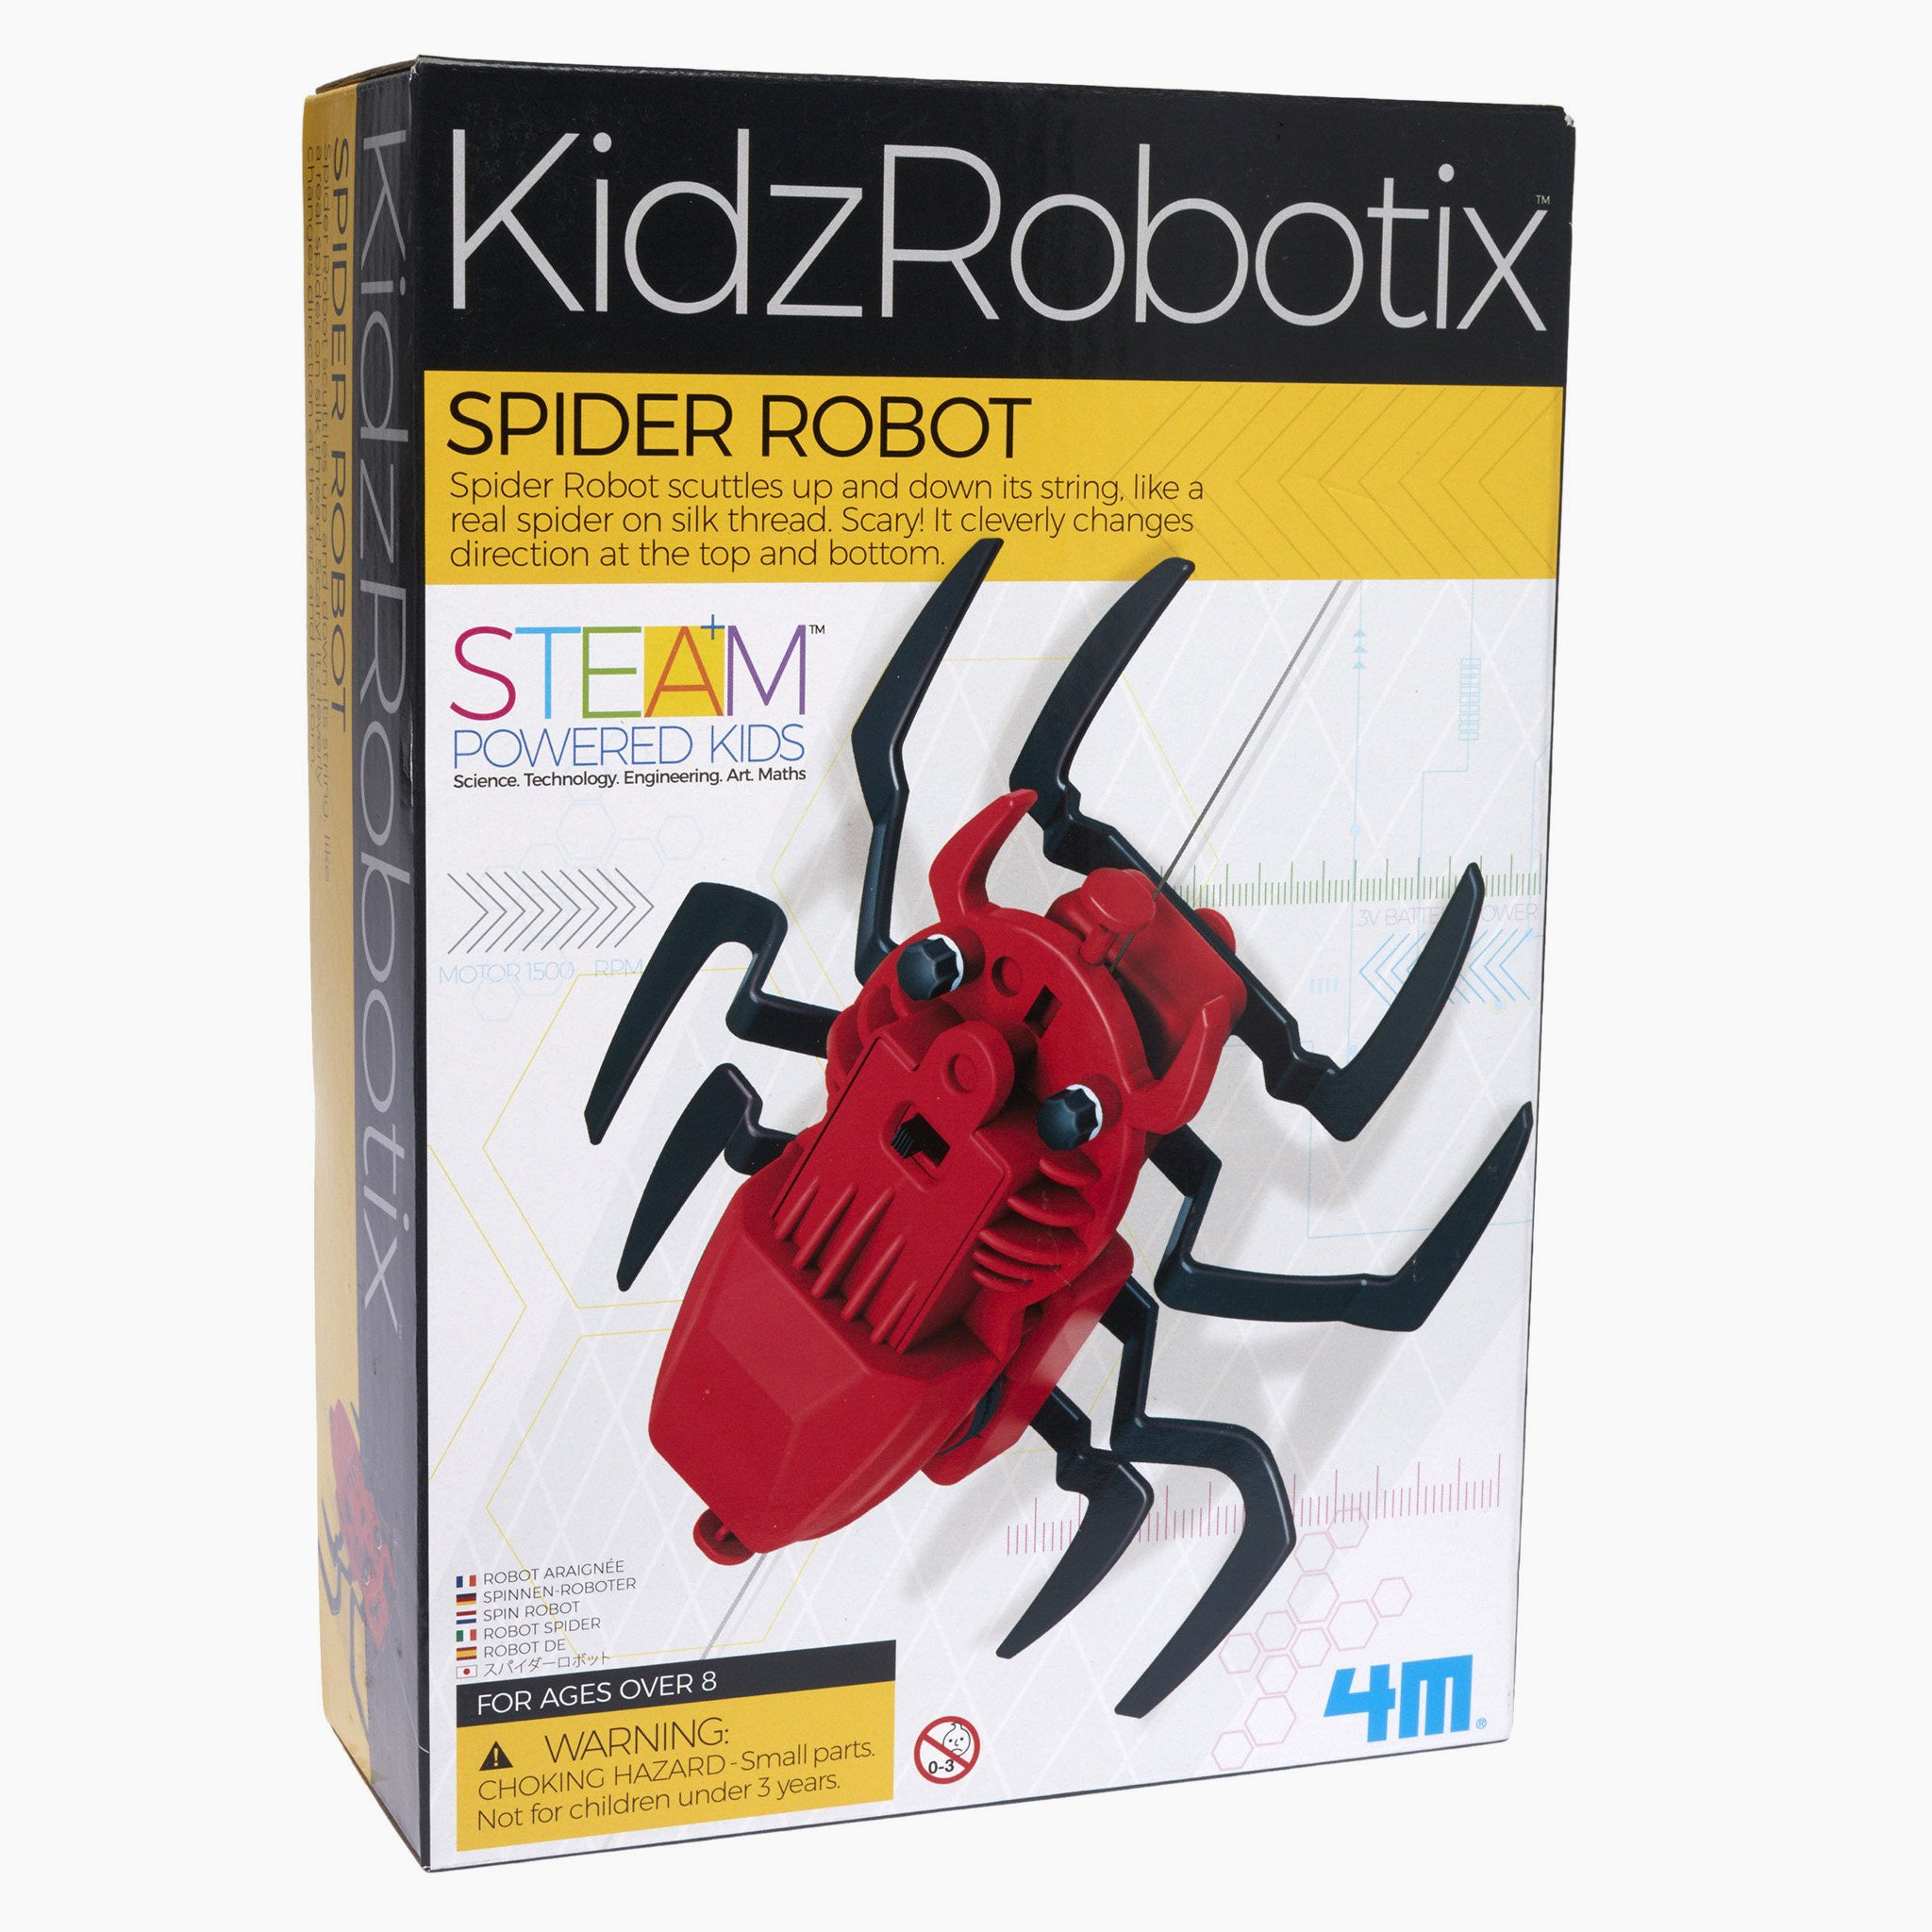 KidzRobotixSpiderRobot1.jpg